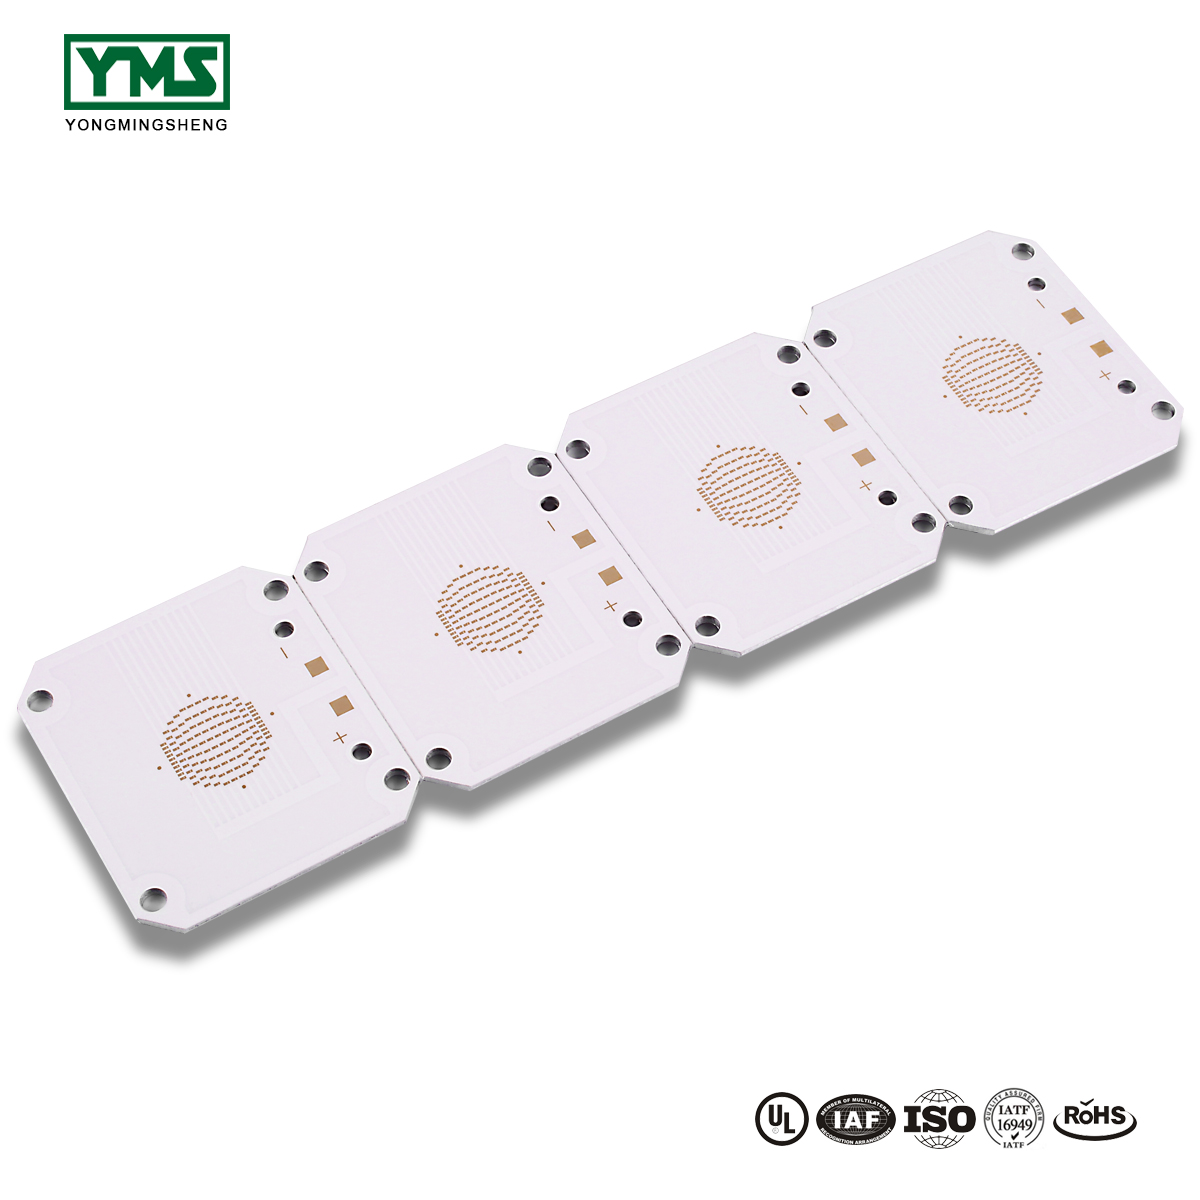 Factory Cheap Hot 1.2m 2layer Led Pcb - 1Layer Aluminum base Board | YMSPCB – Yongmingsheng